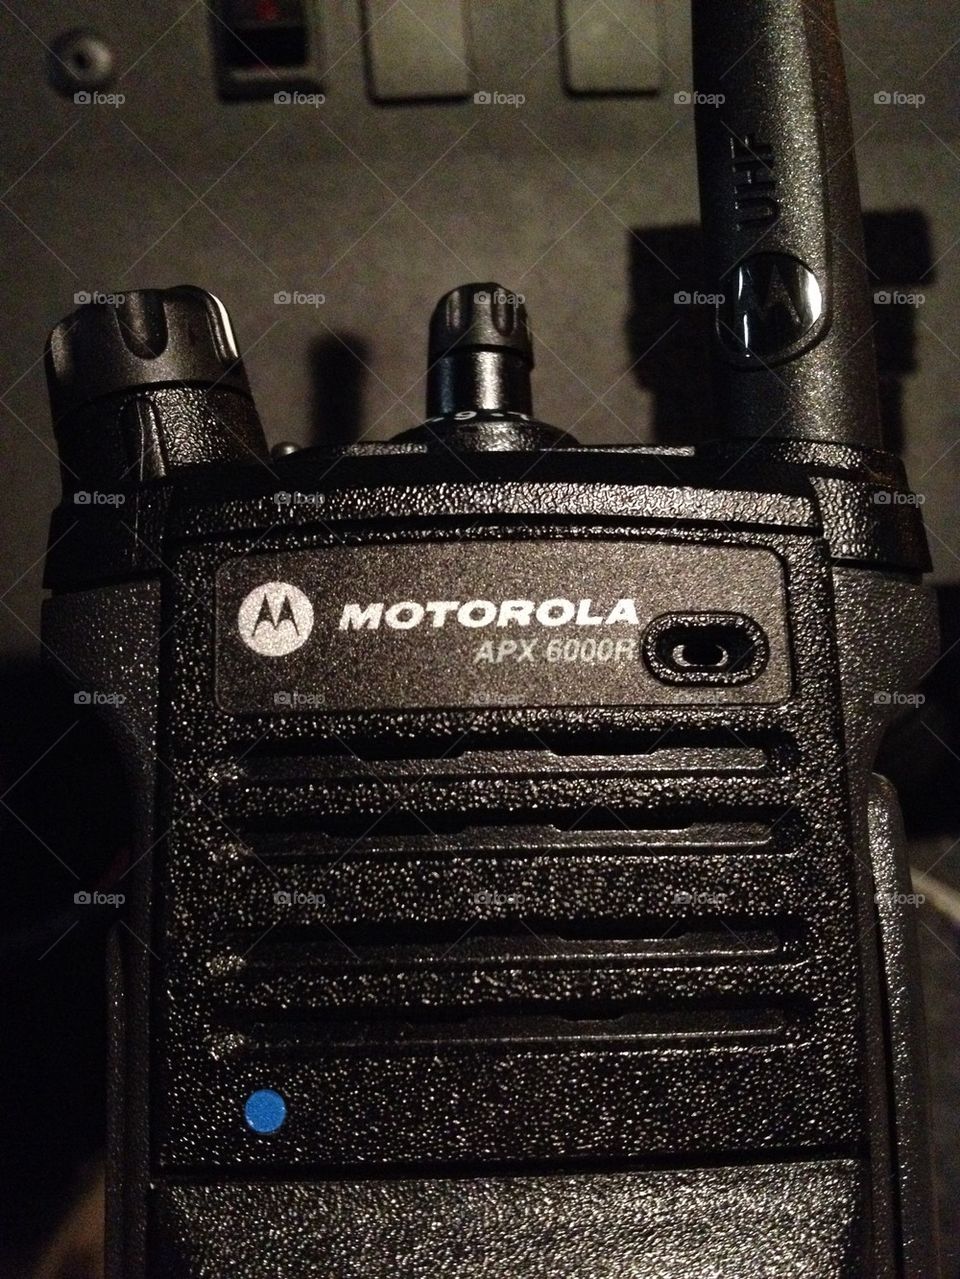 Motorola radio